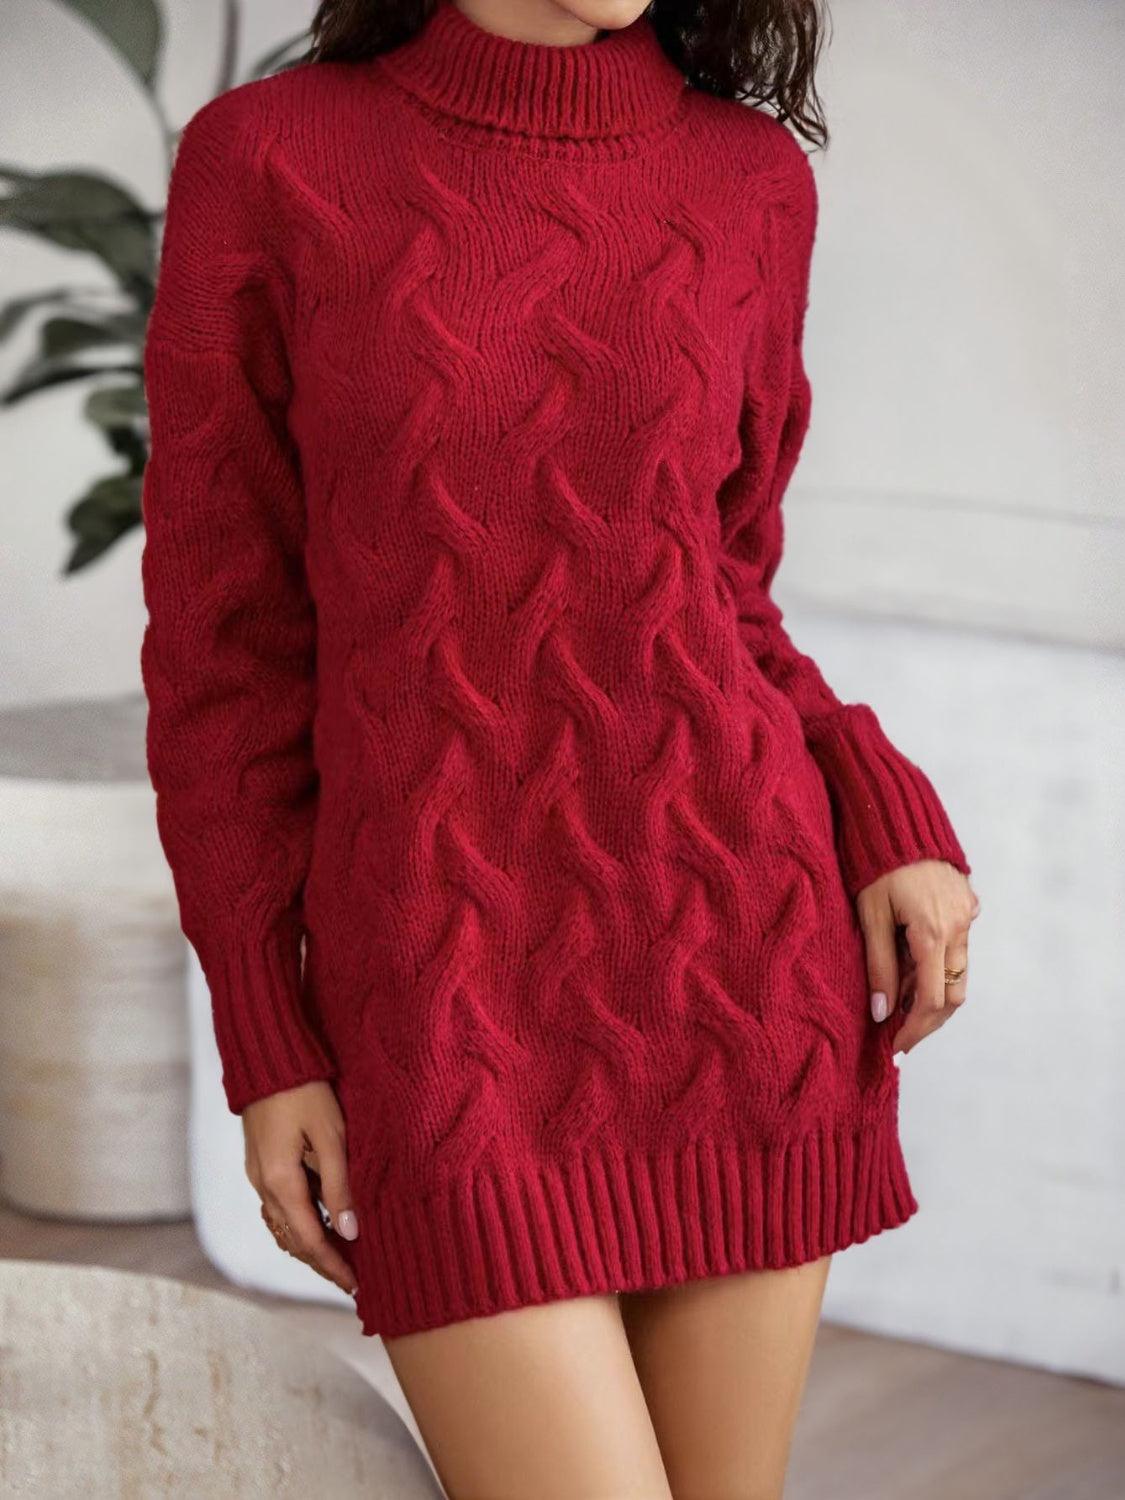 Turtleneck Sweater Dress - Lab Fashion, Home & Health